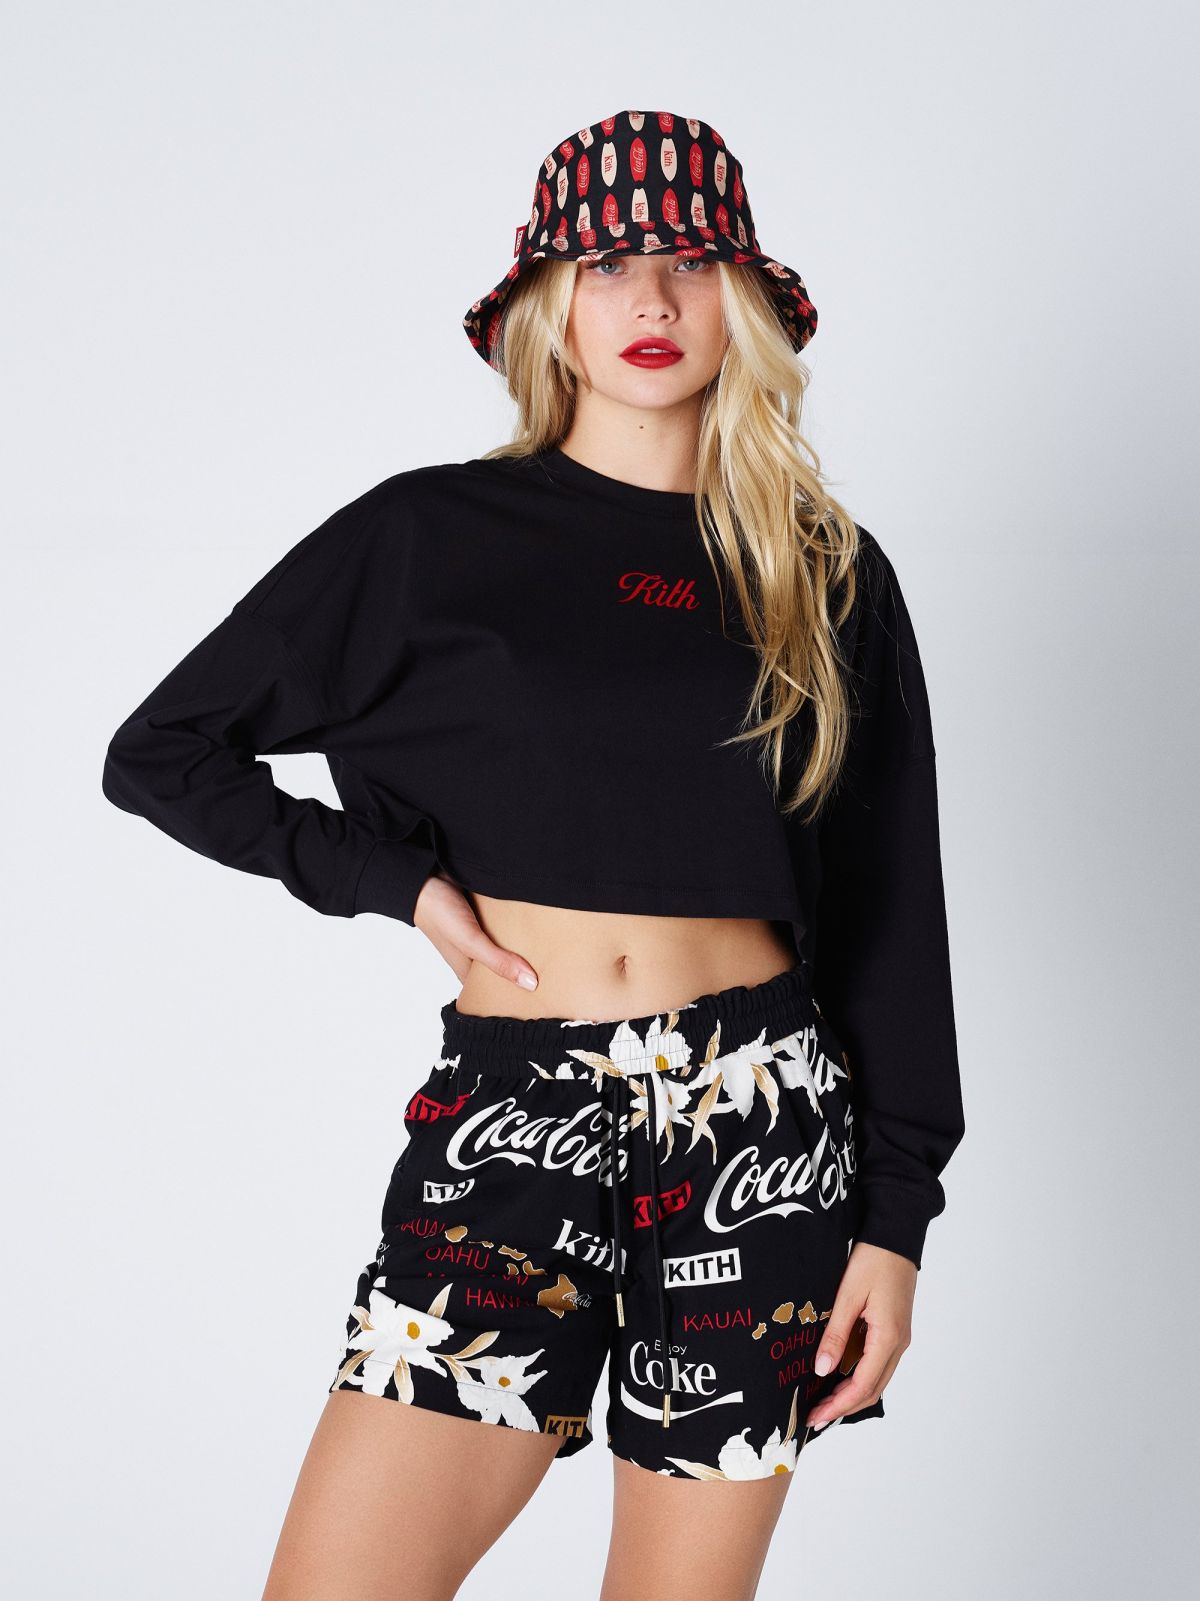 Josie Canseco â€“ Kith x Coca Cola 2019 photoshoot